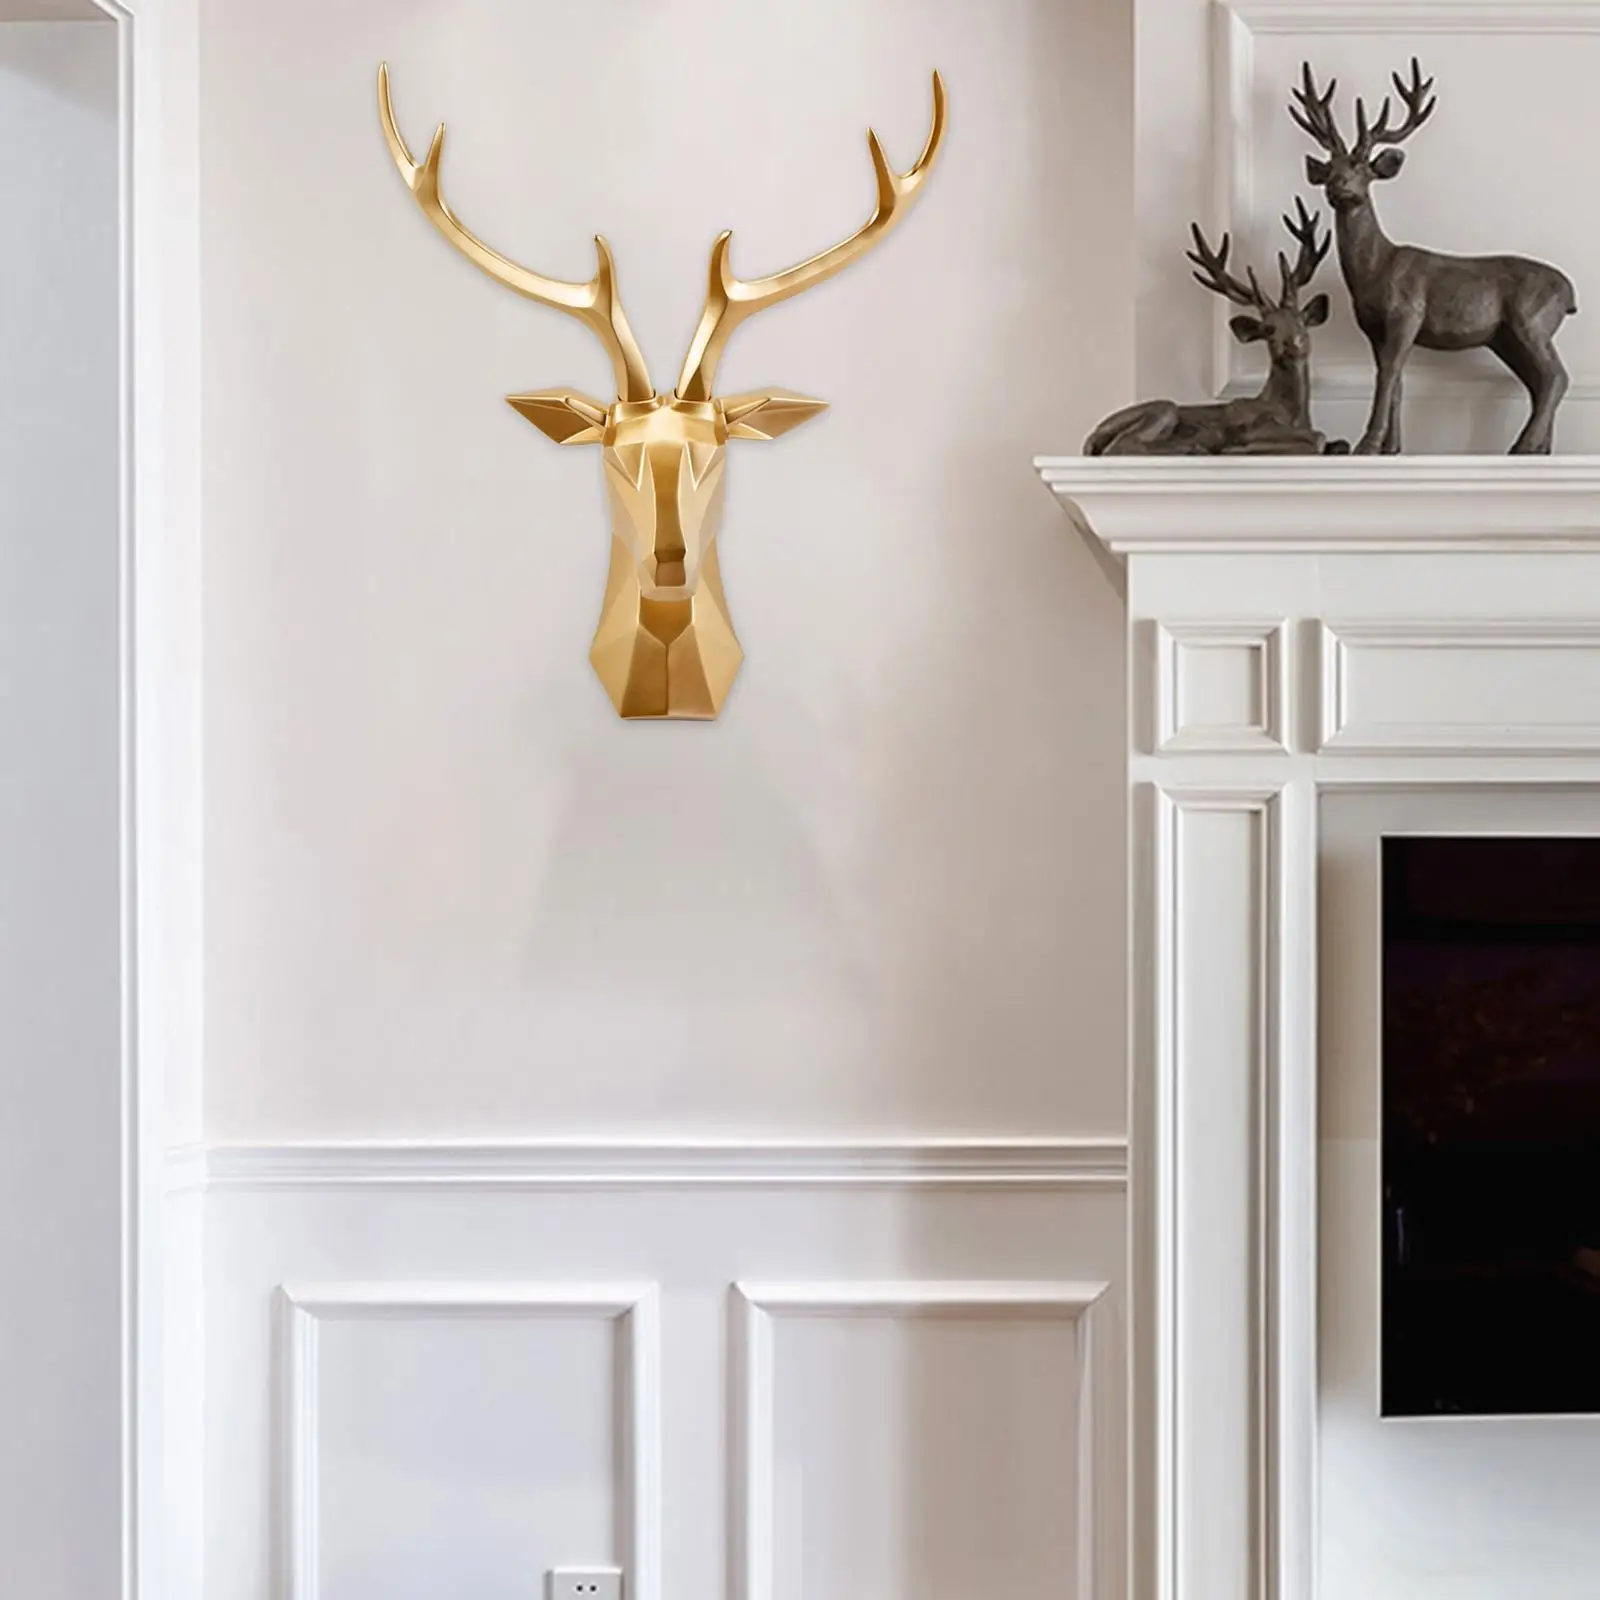 3 Head Decorative -Elegant Wall Sculpture Decor -Farmhouse Decor -Geometry Deer Antlers Gallery Wall